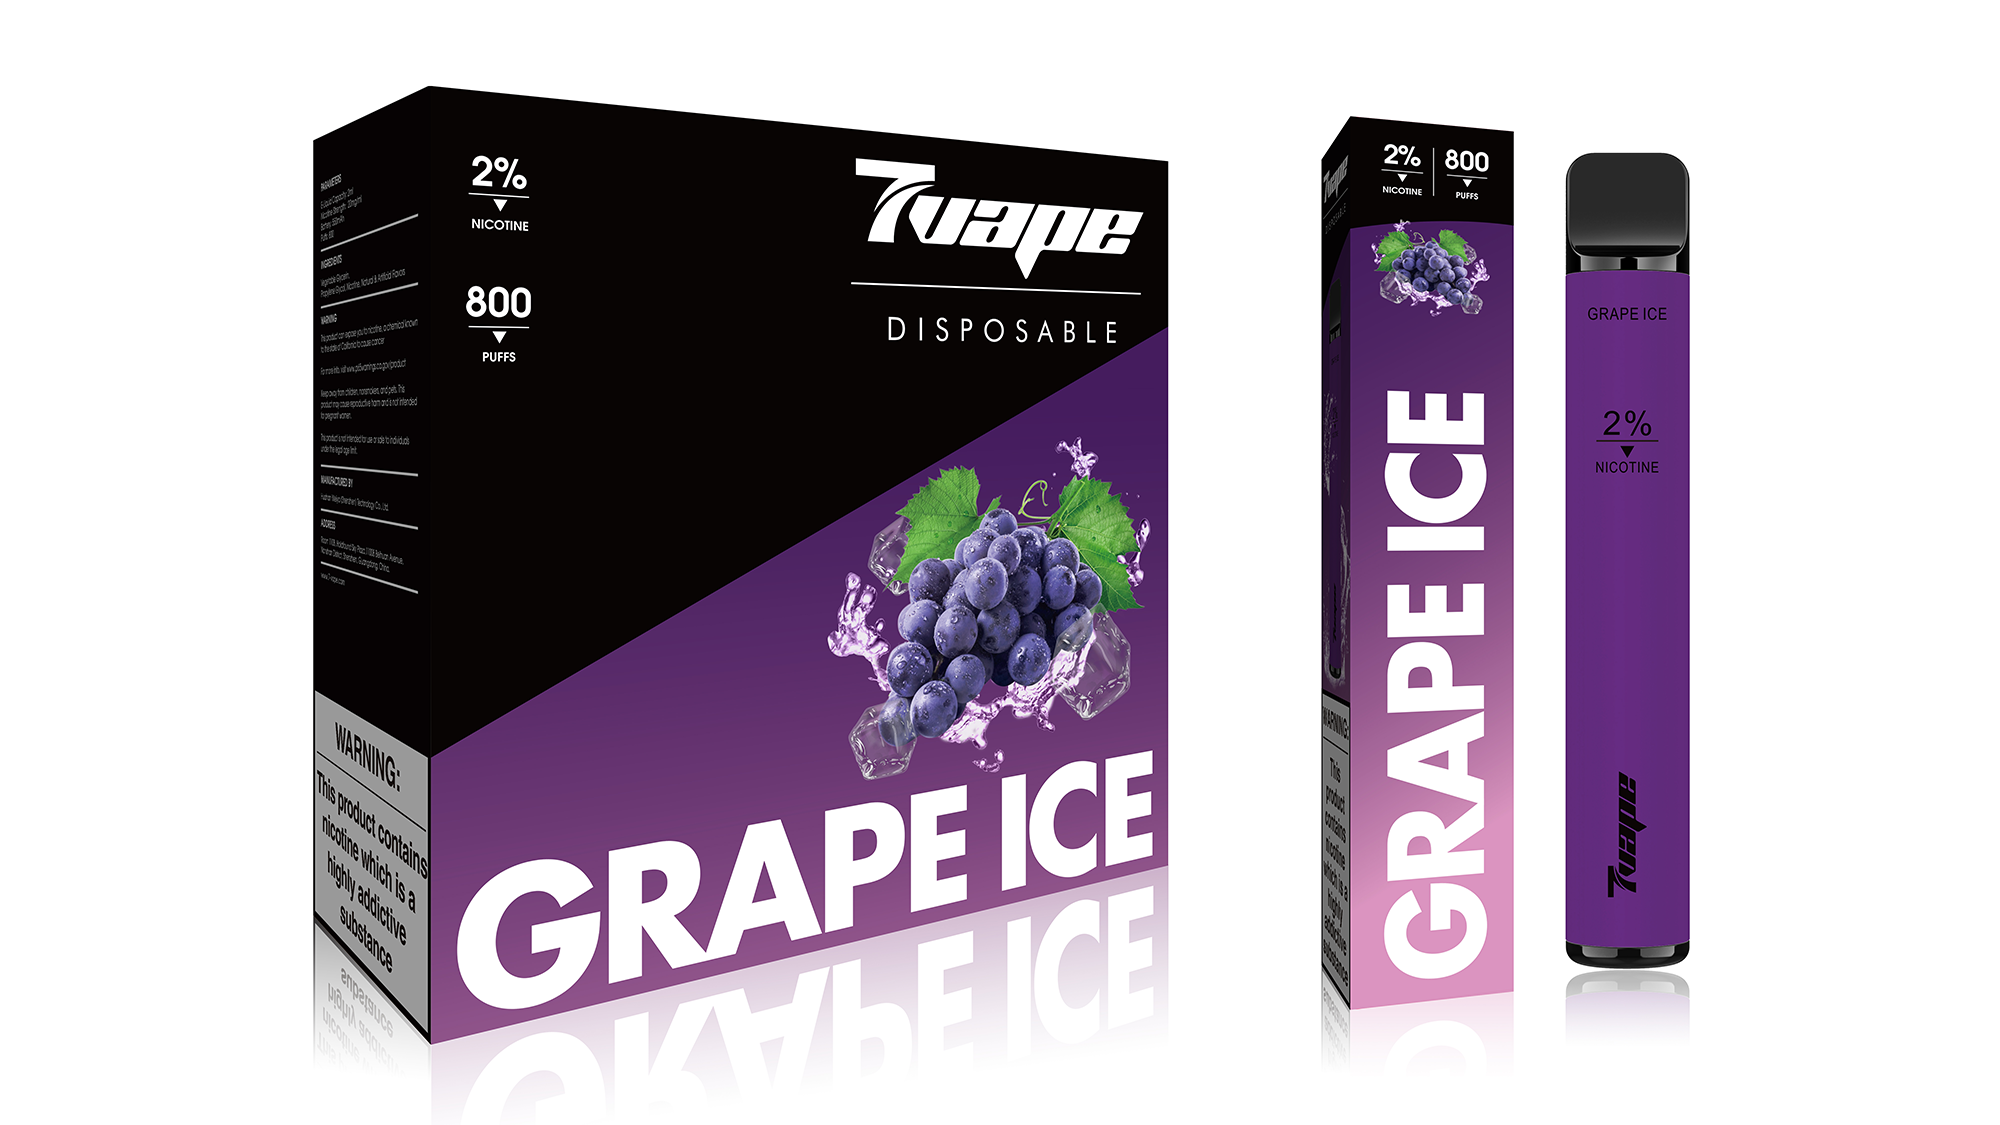 7VAPE disposable vape, grape ice vape, 800 puffs, 2% nicotine, 7-VAPE BAR